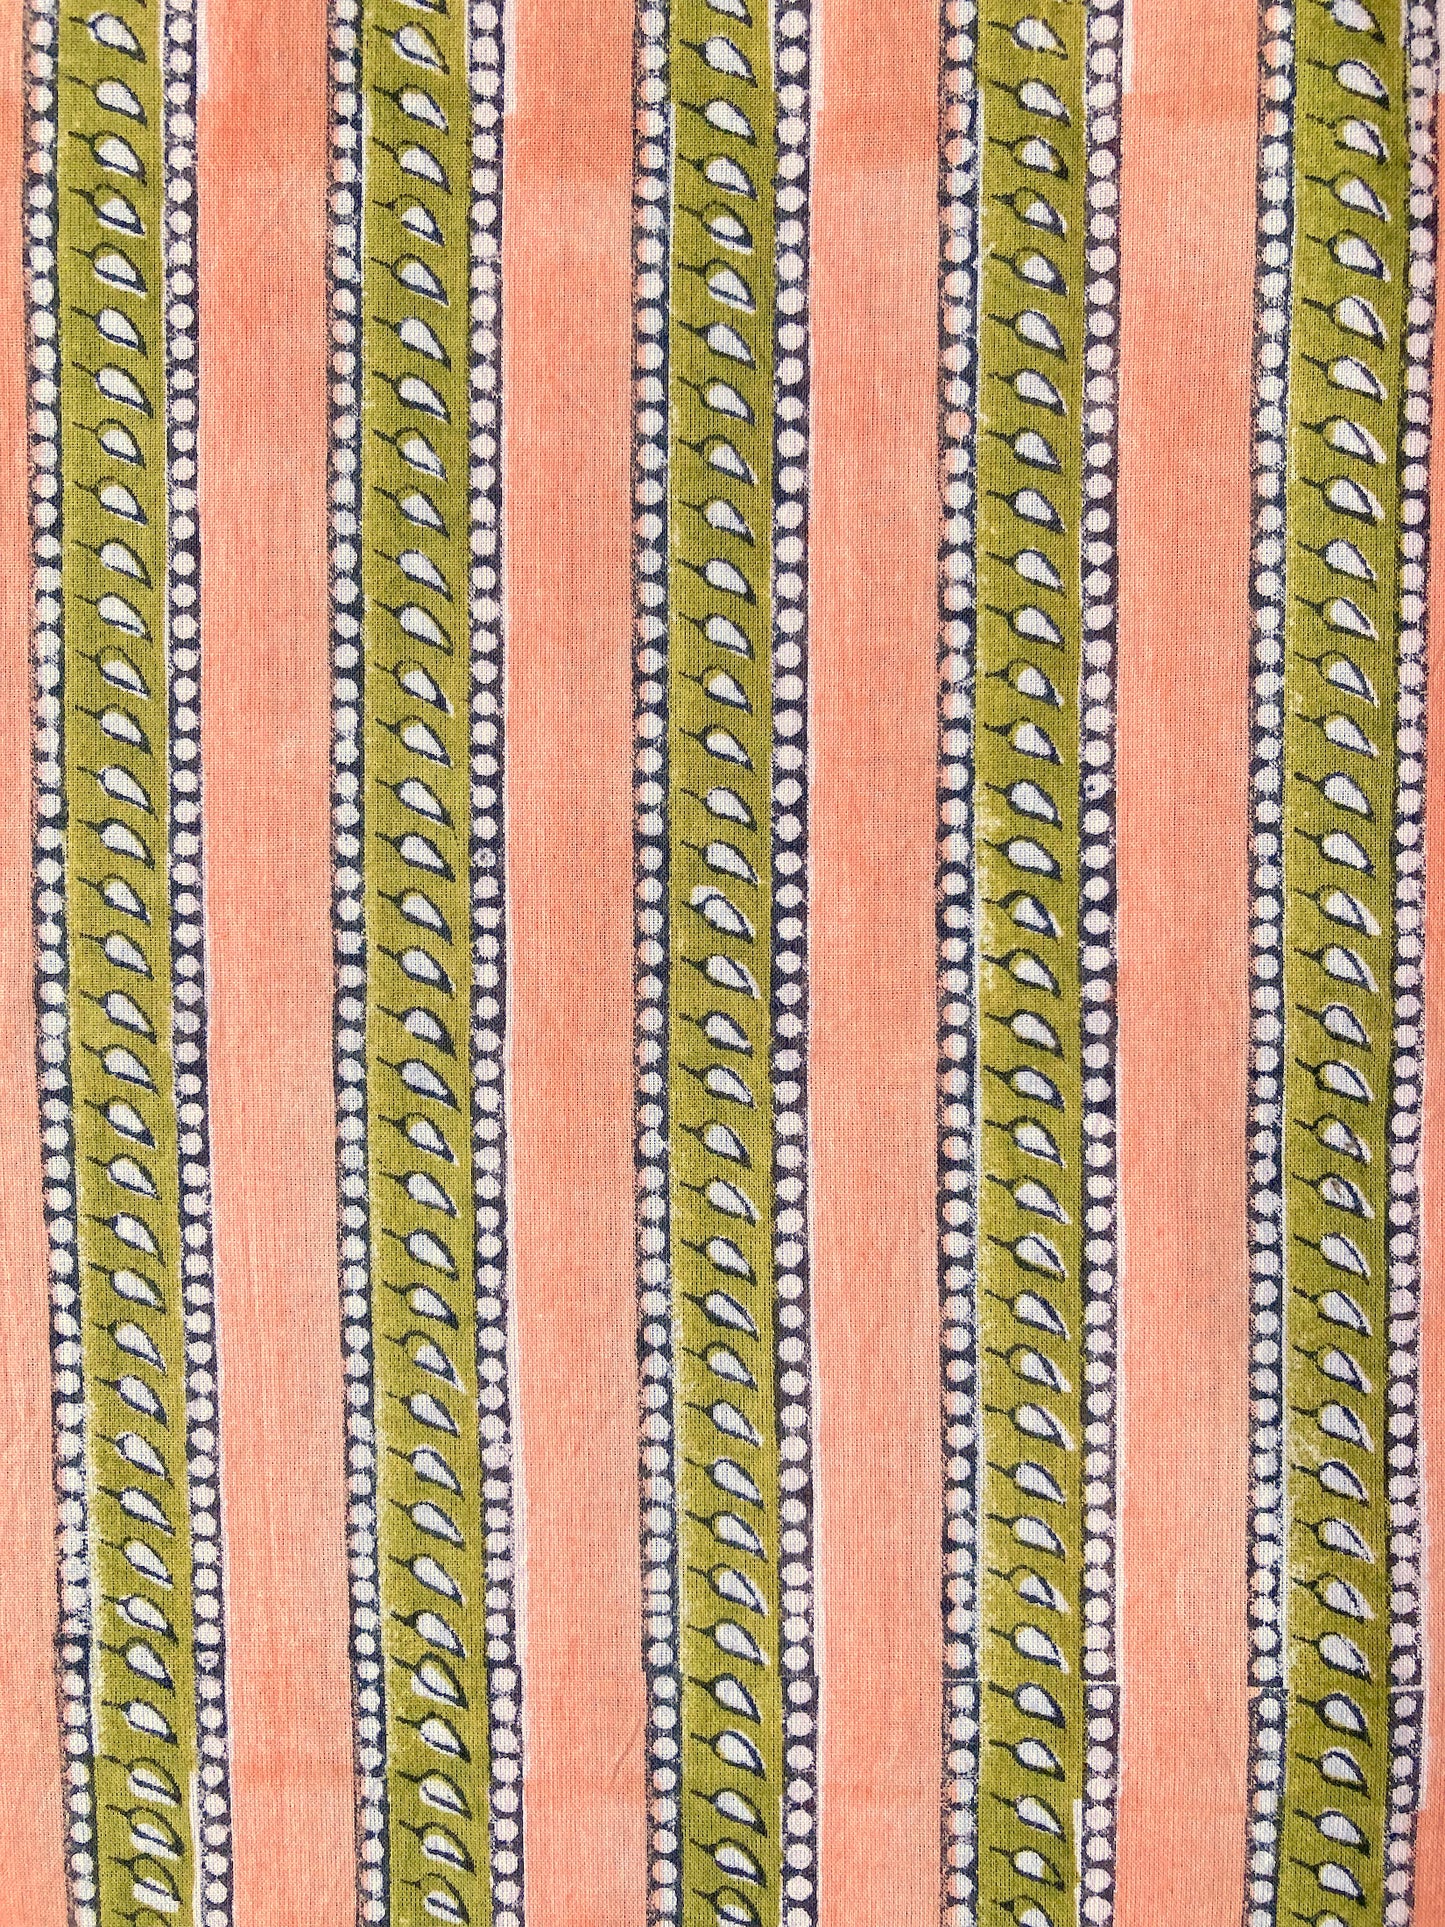 Hand Block Printed Cotton Fabric Salmon/Olive #197-25